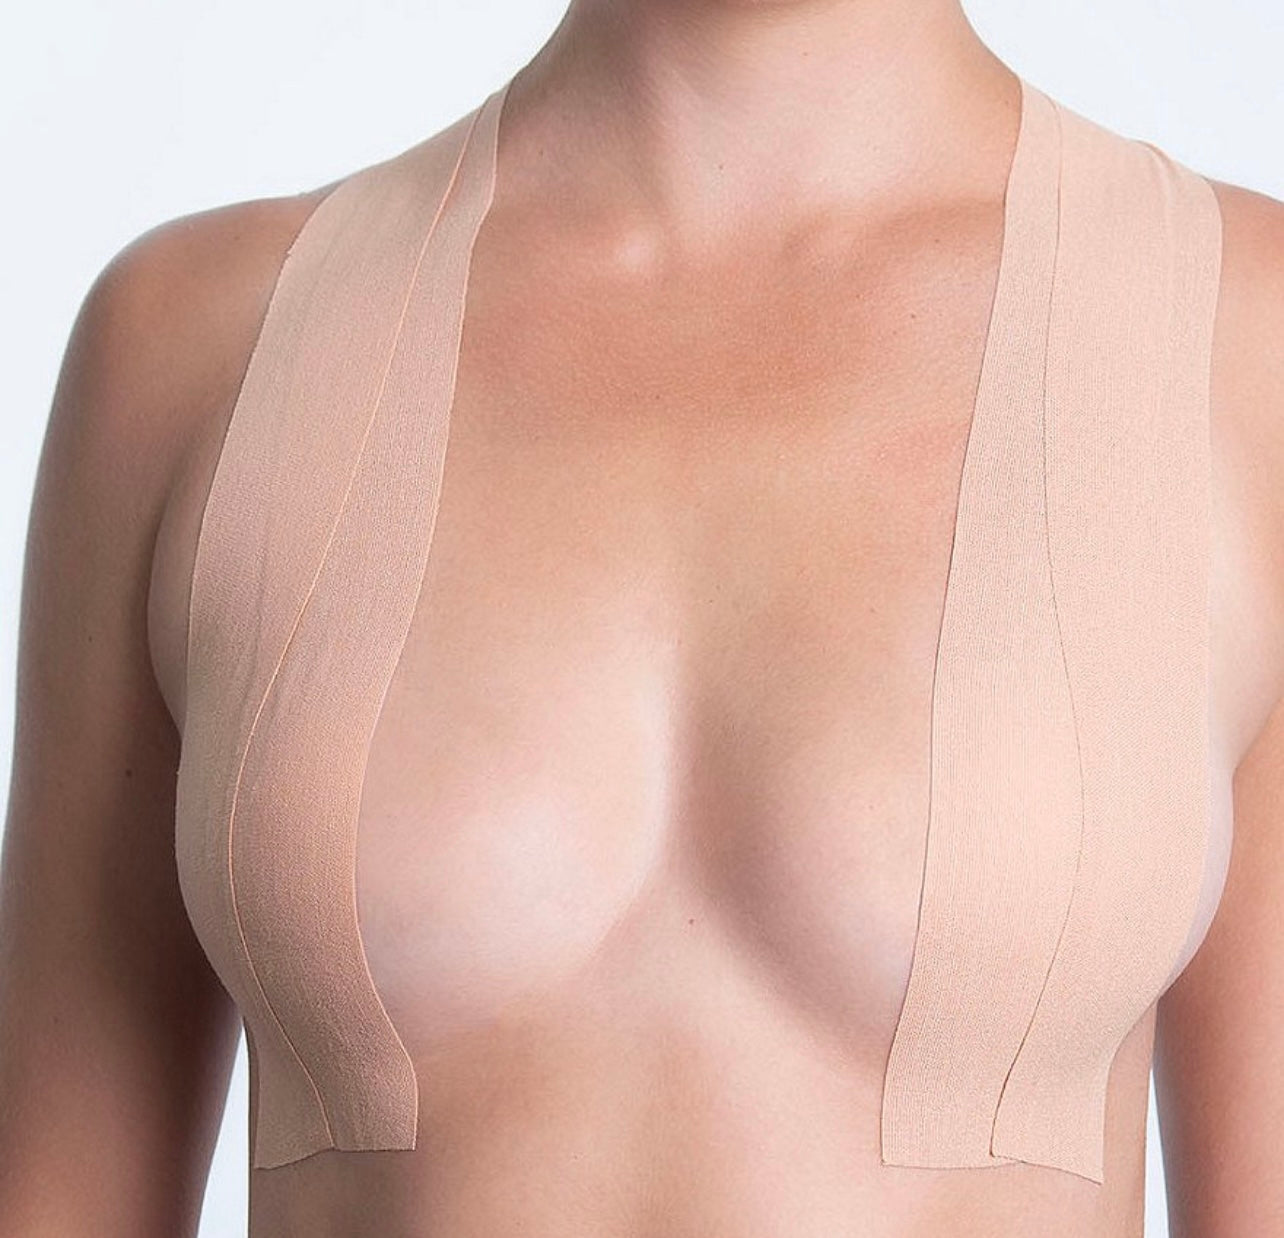 Breast Lift Tape – Girly Curves LLC